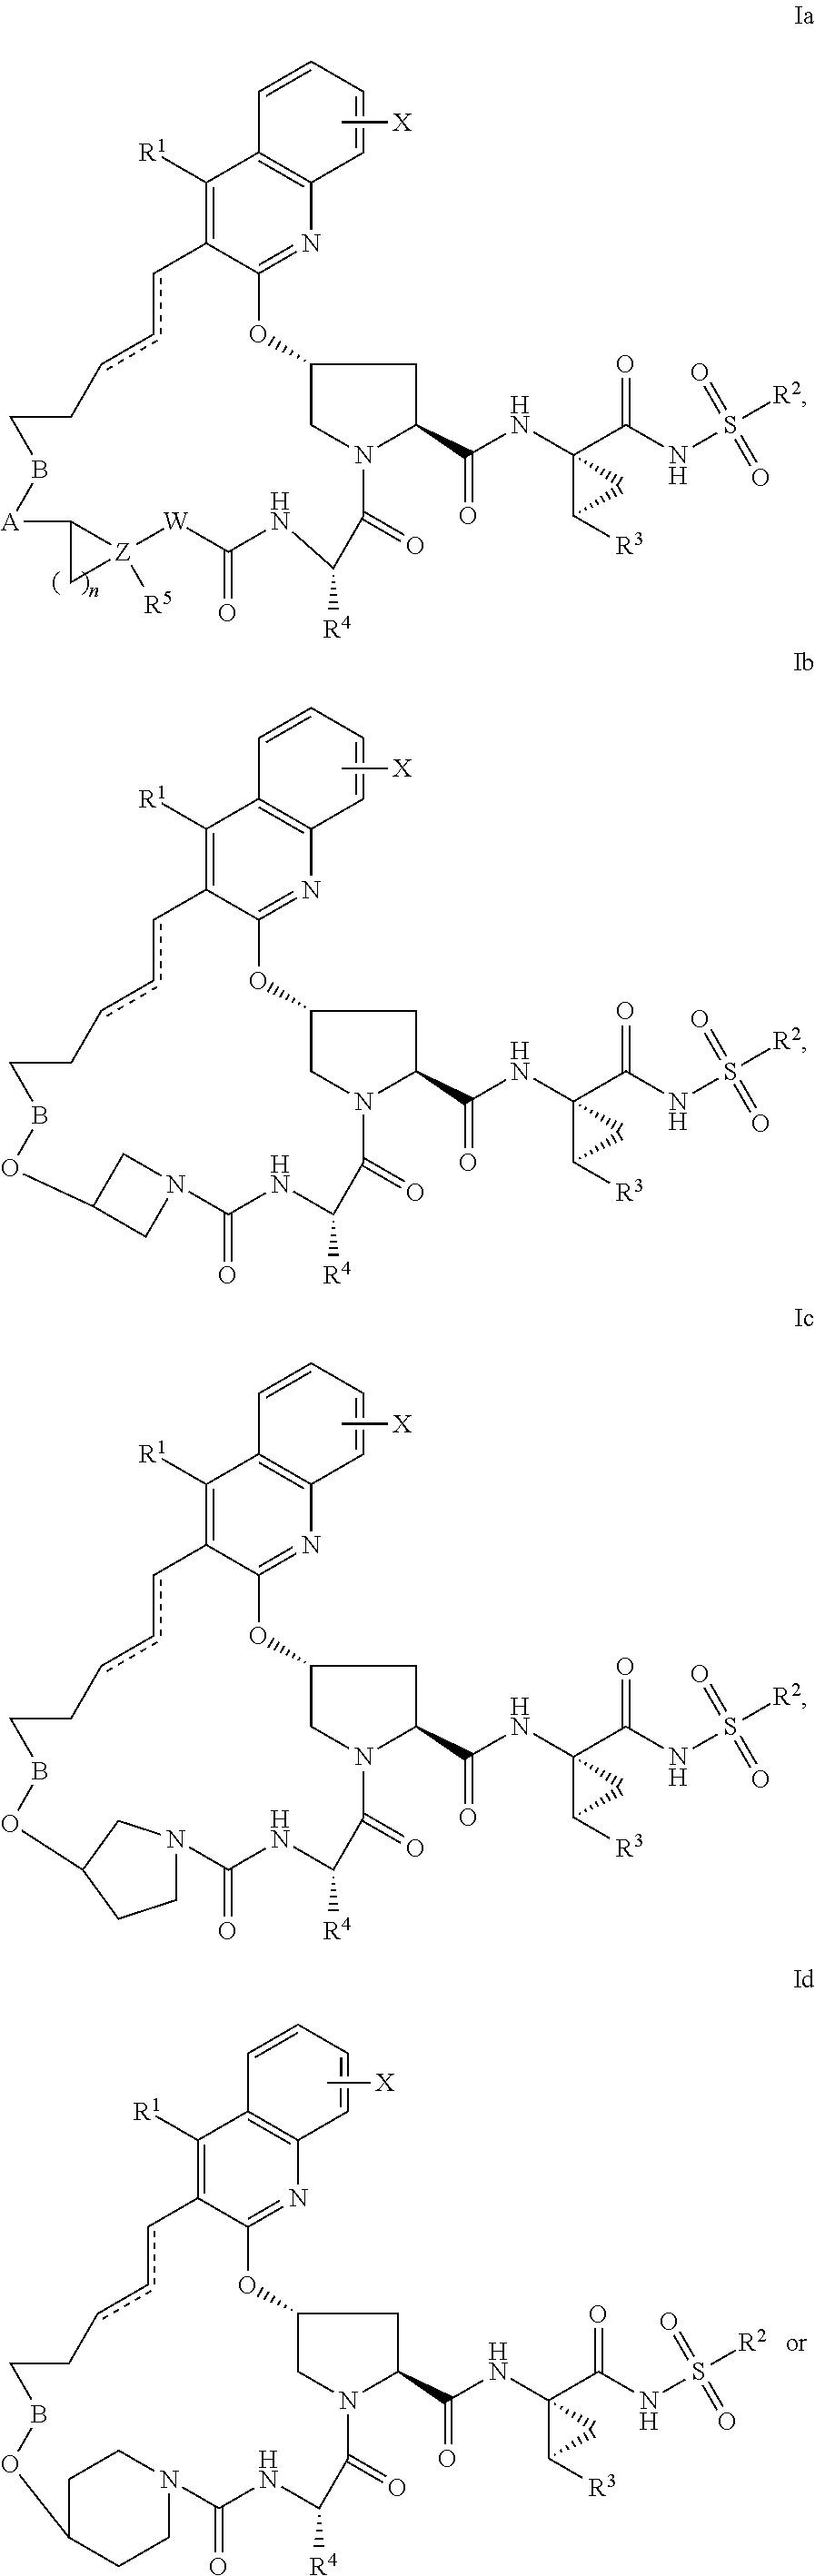 Hcv ns3 protease inhibitors